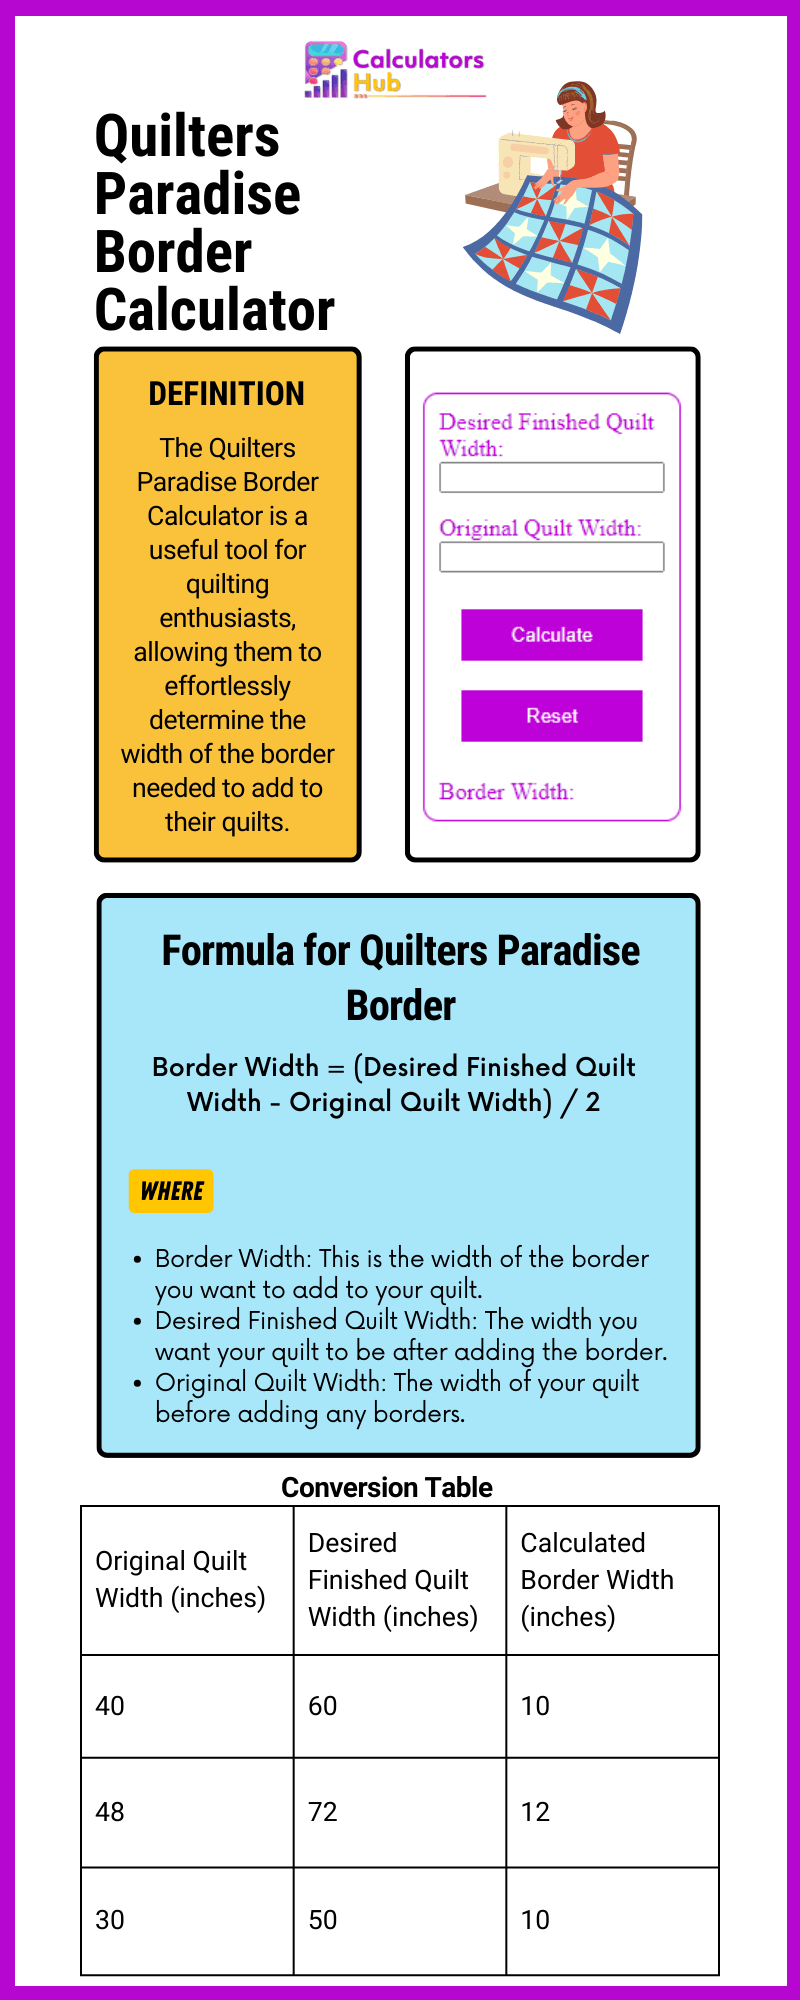 Quilters Paradise Border Calculator